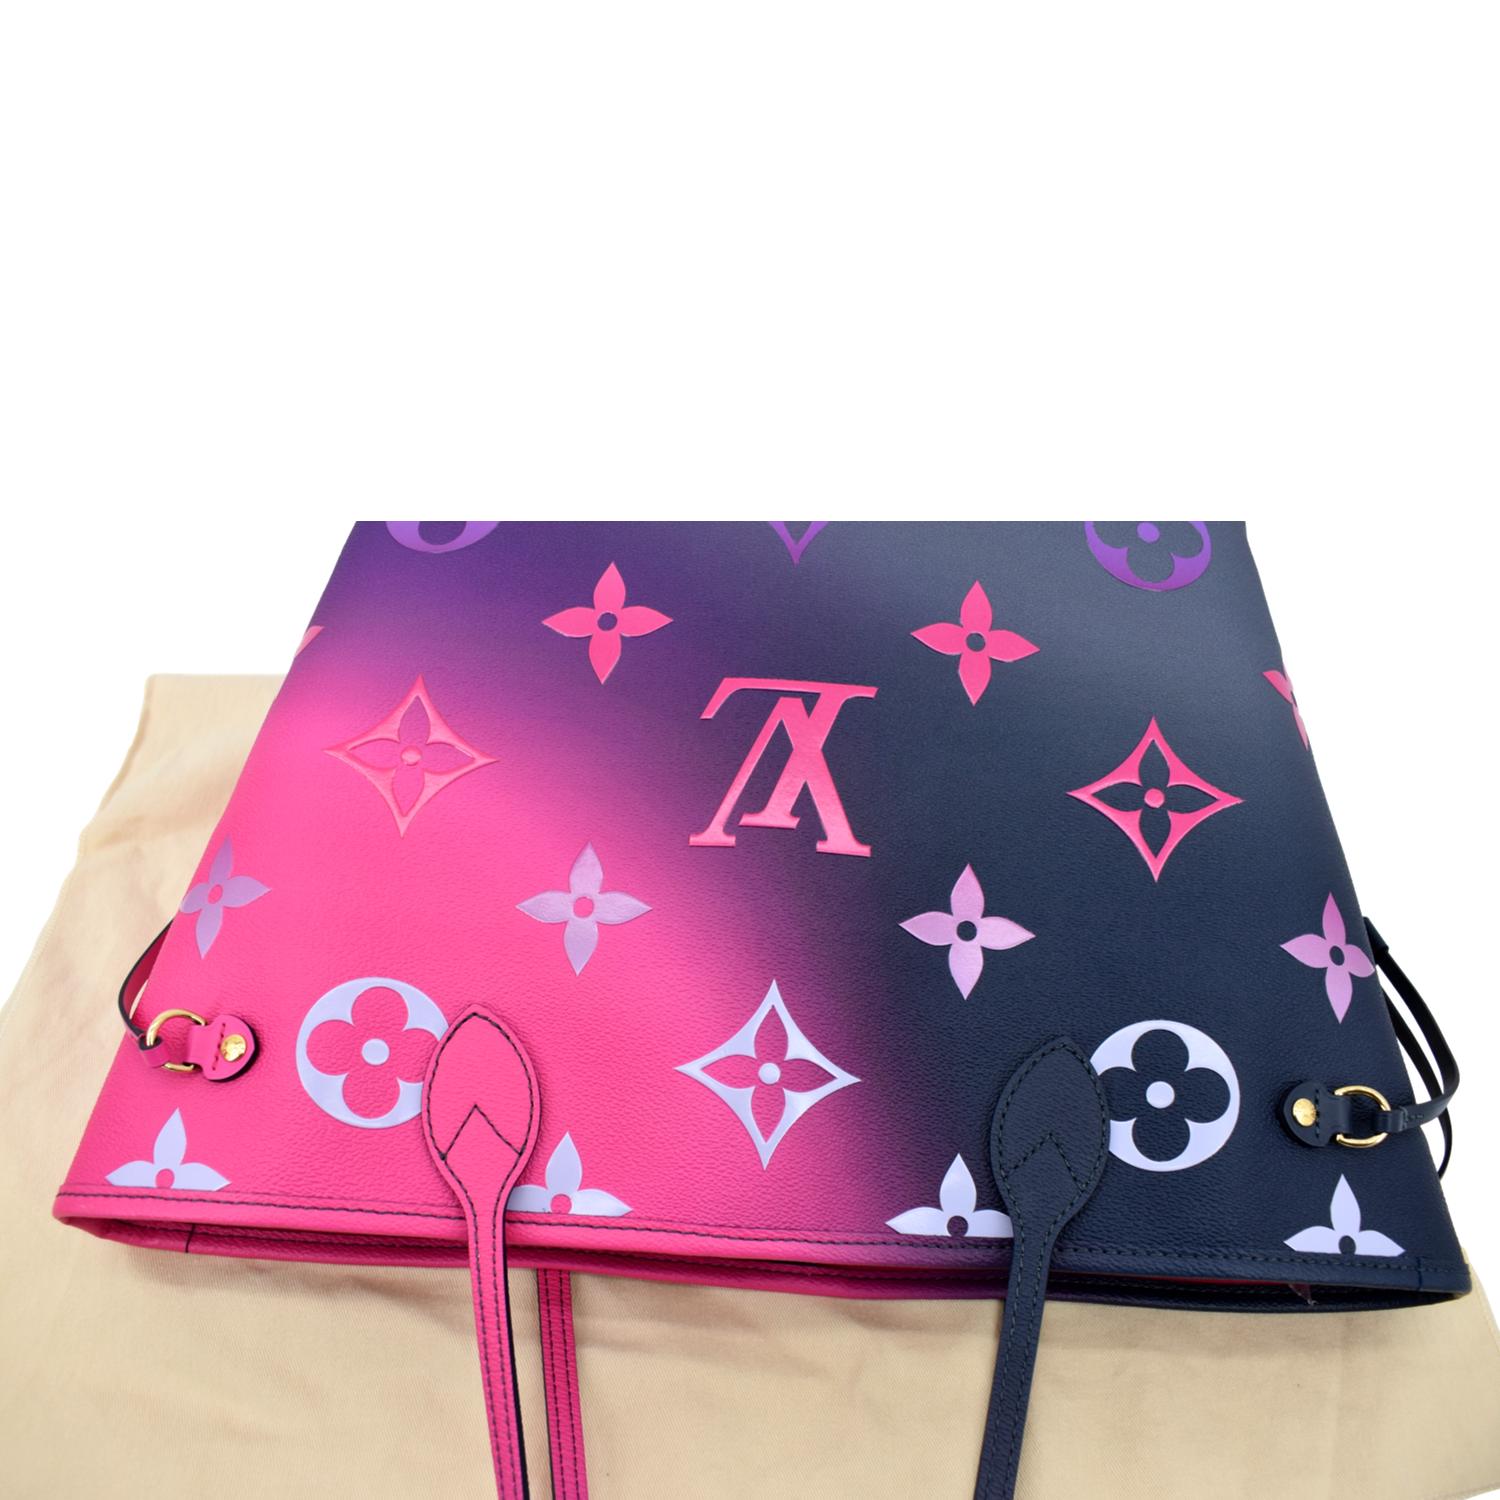 Chanel Timeless Shoulder bag 399996, LOUIS VUITTON Neverfull MM Monogram  Canvas Tote Bag Midnight Fuchsia